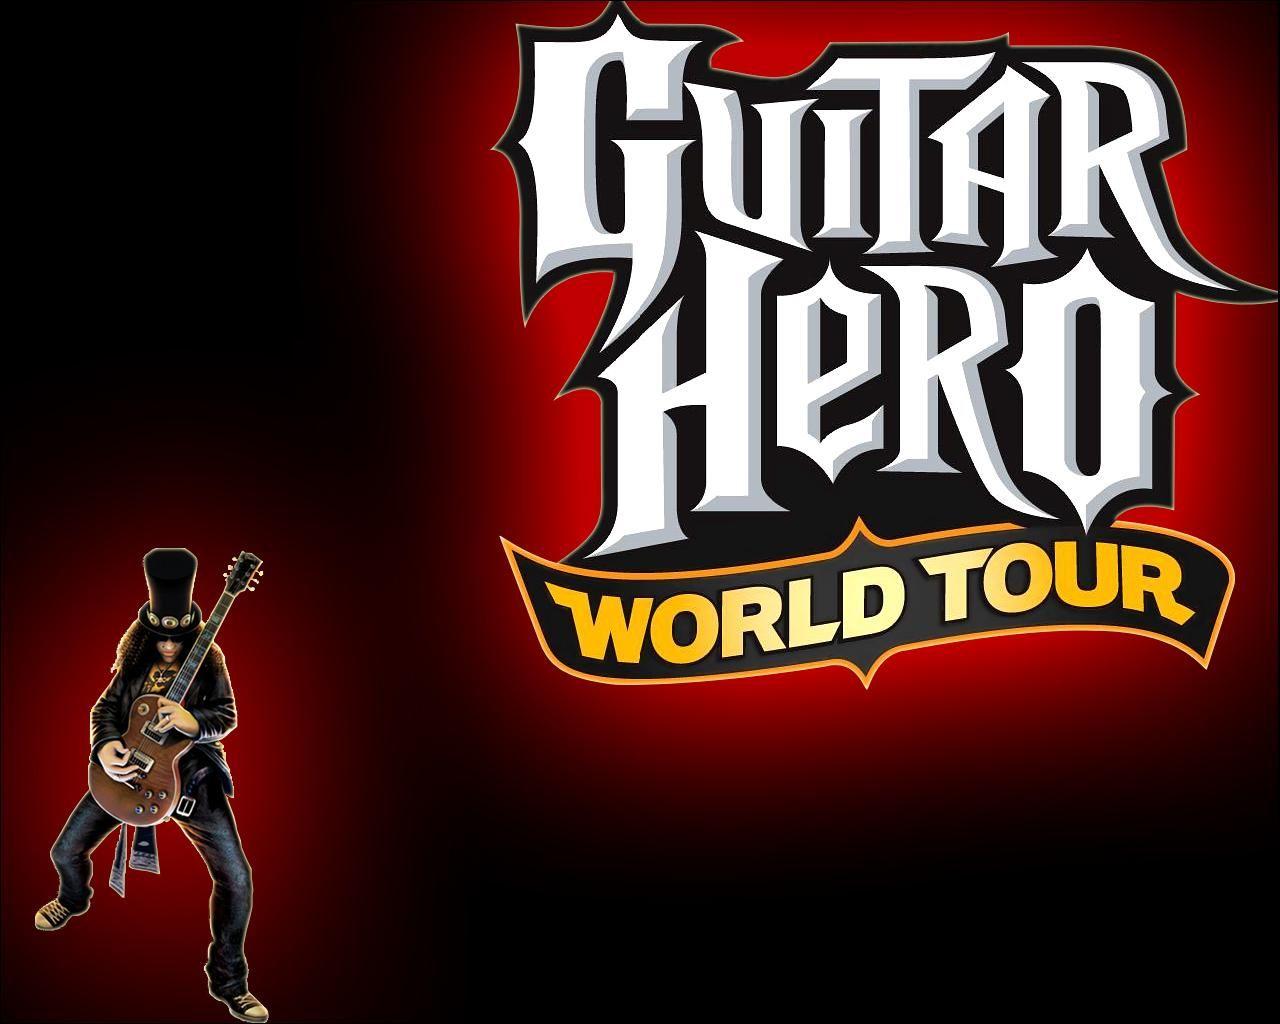 Guitar Hero wallpaper picture download